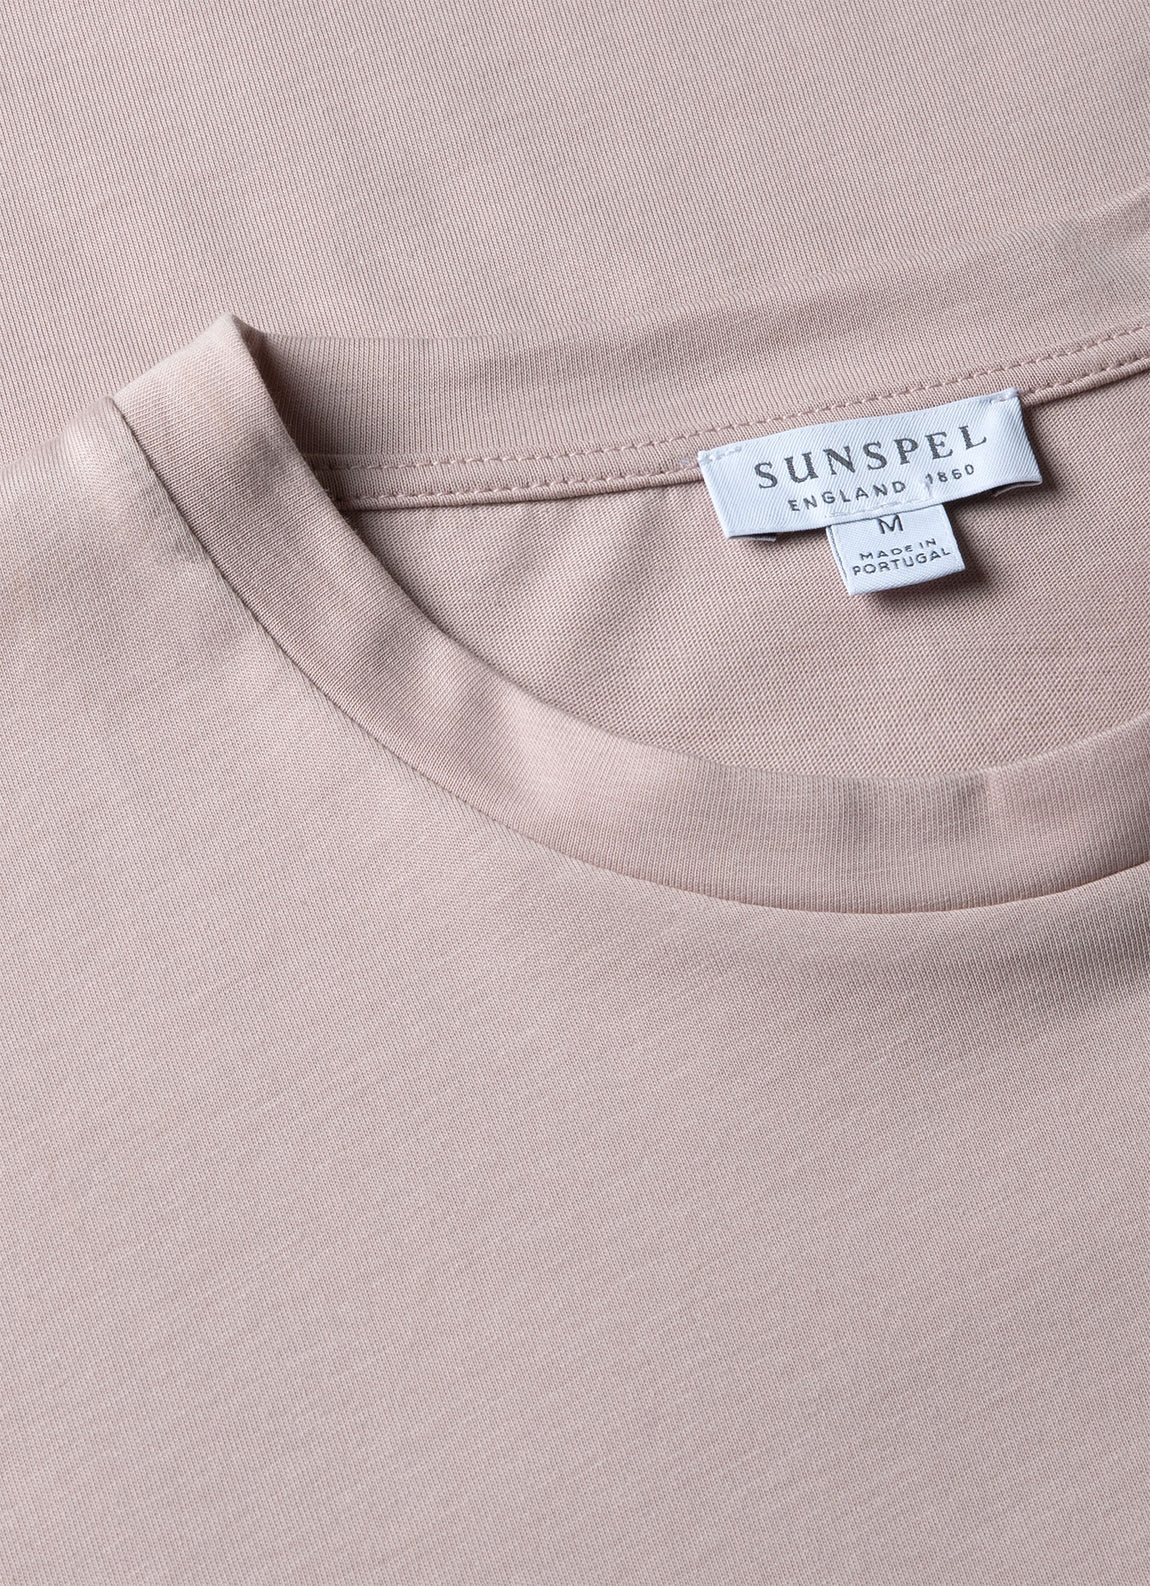 Men's Riviera Midweight T‑shirt in Pale Pink | Sunspel